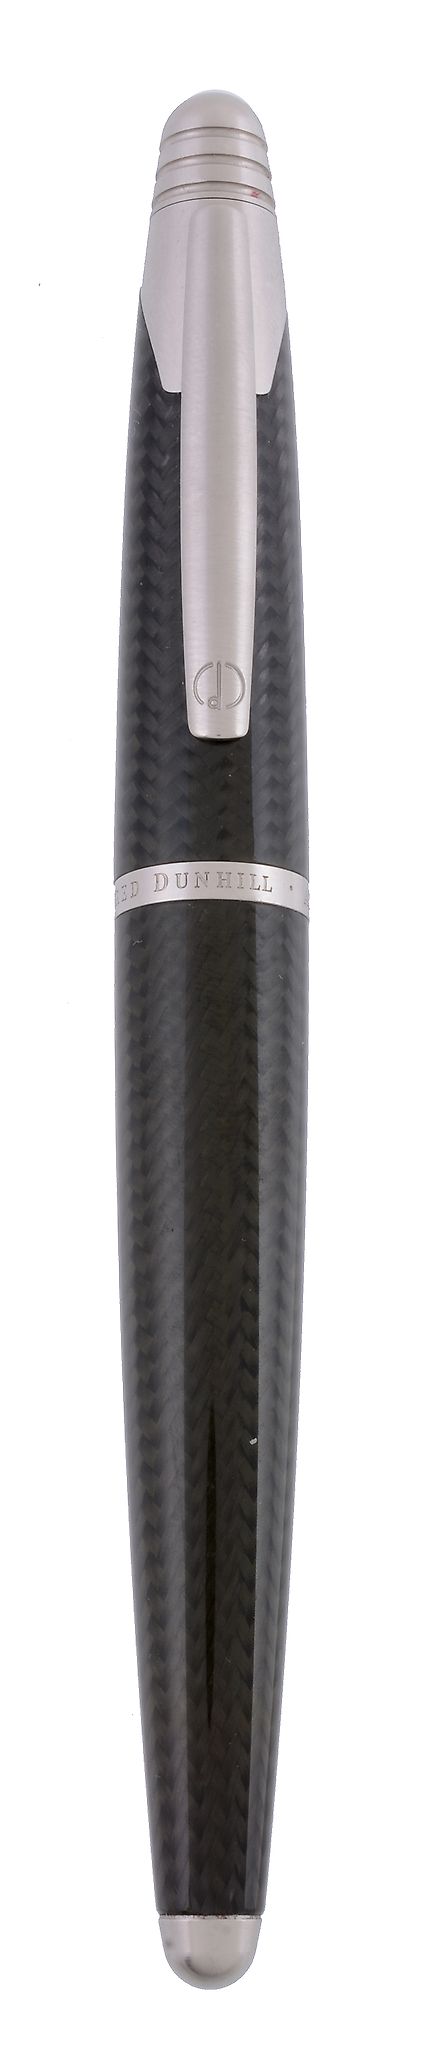 Dunhill, AD2000, a fountain pen,   with a carbon fibre cap and barrel and chrome trim, the nib